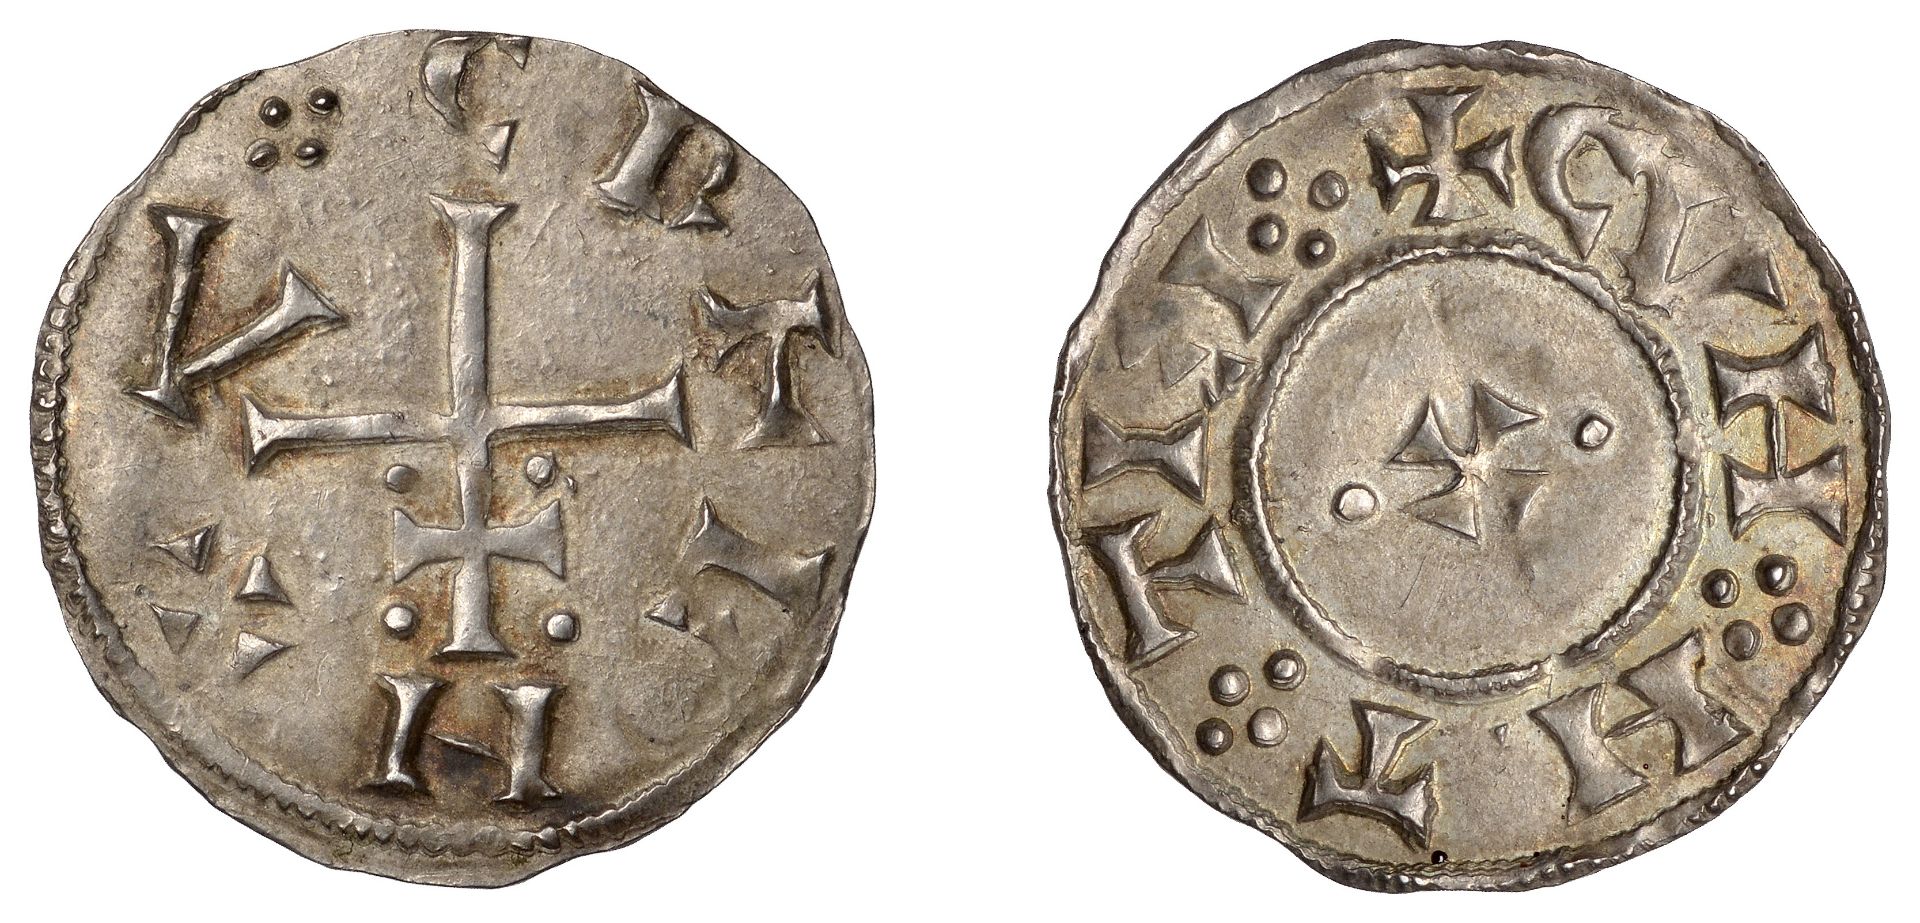 Danes of York, Cnut (c. 900-910), Penny, cnvt rex Â·:Â· around patriarchal cross, rev. cvn Â·:Â·...